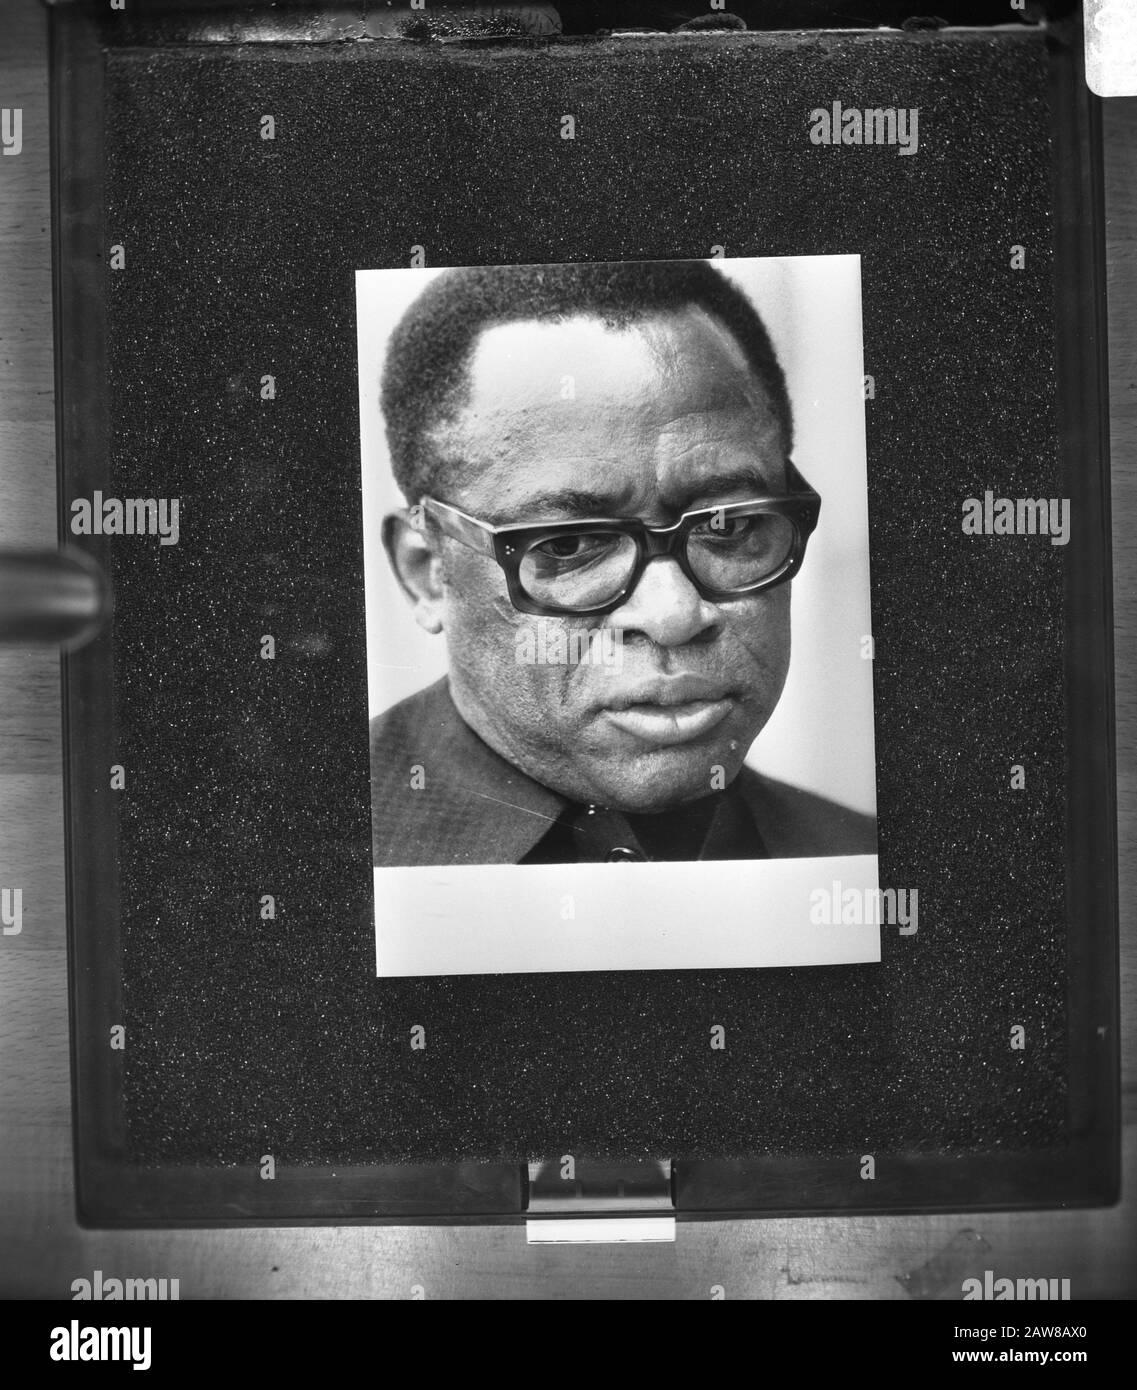 Präsident Mobutu von Zaire Datum: 16. Mai 1978 Ort: Zaire Personenname: Mobutu Sese Seko, Joseph Stockfoto